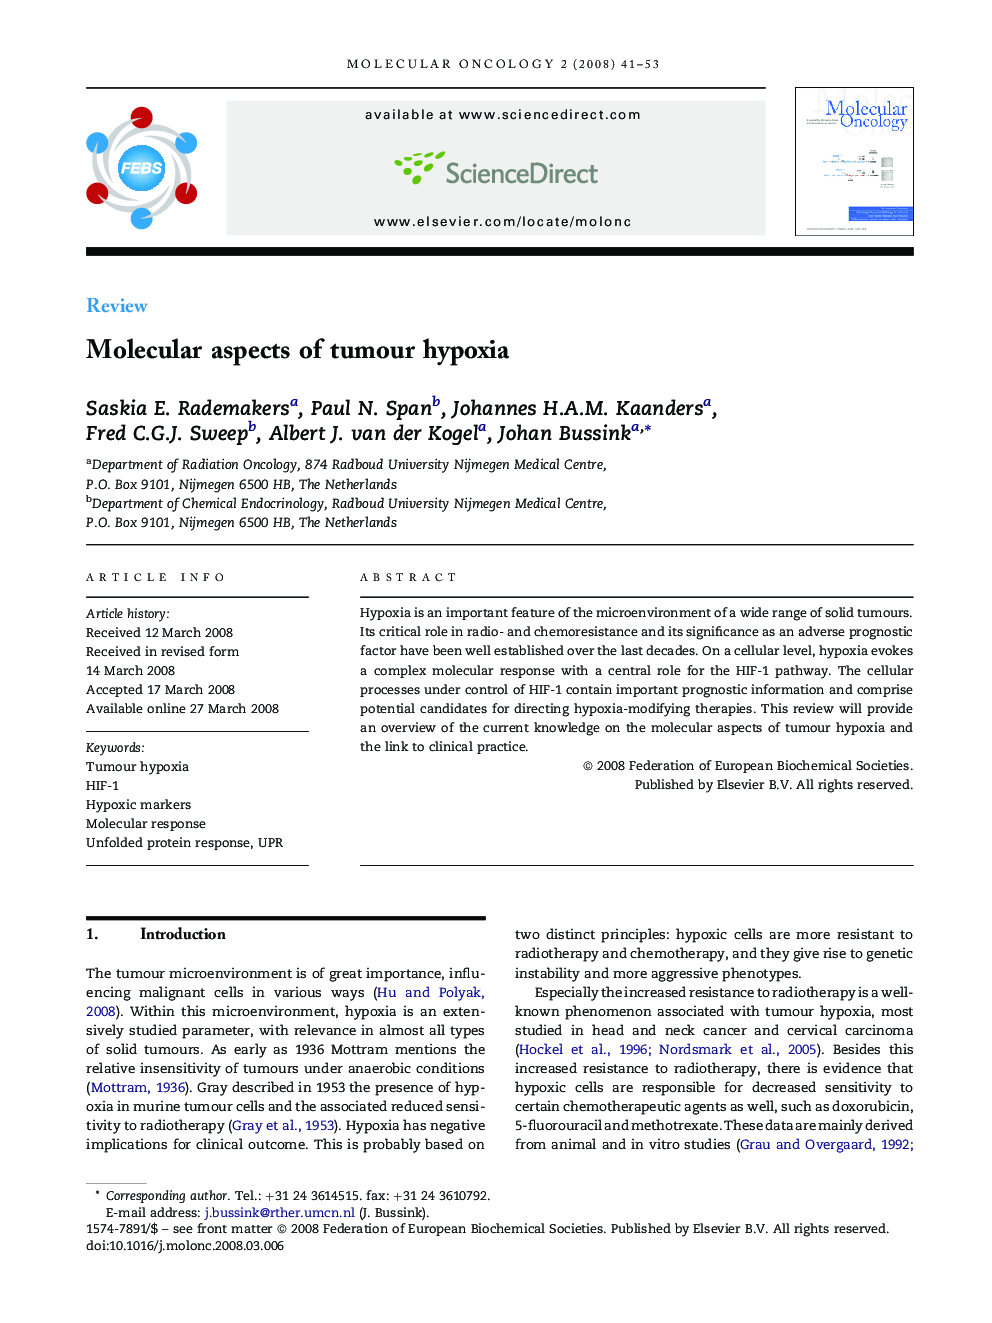 Molecular aspects of tumour hypoxia